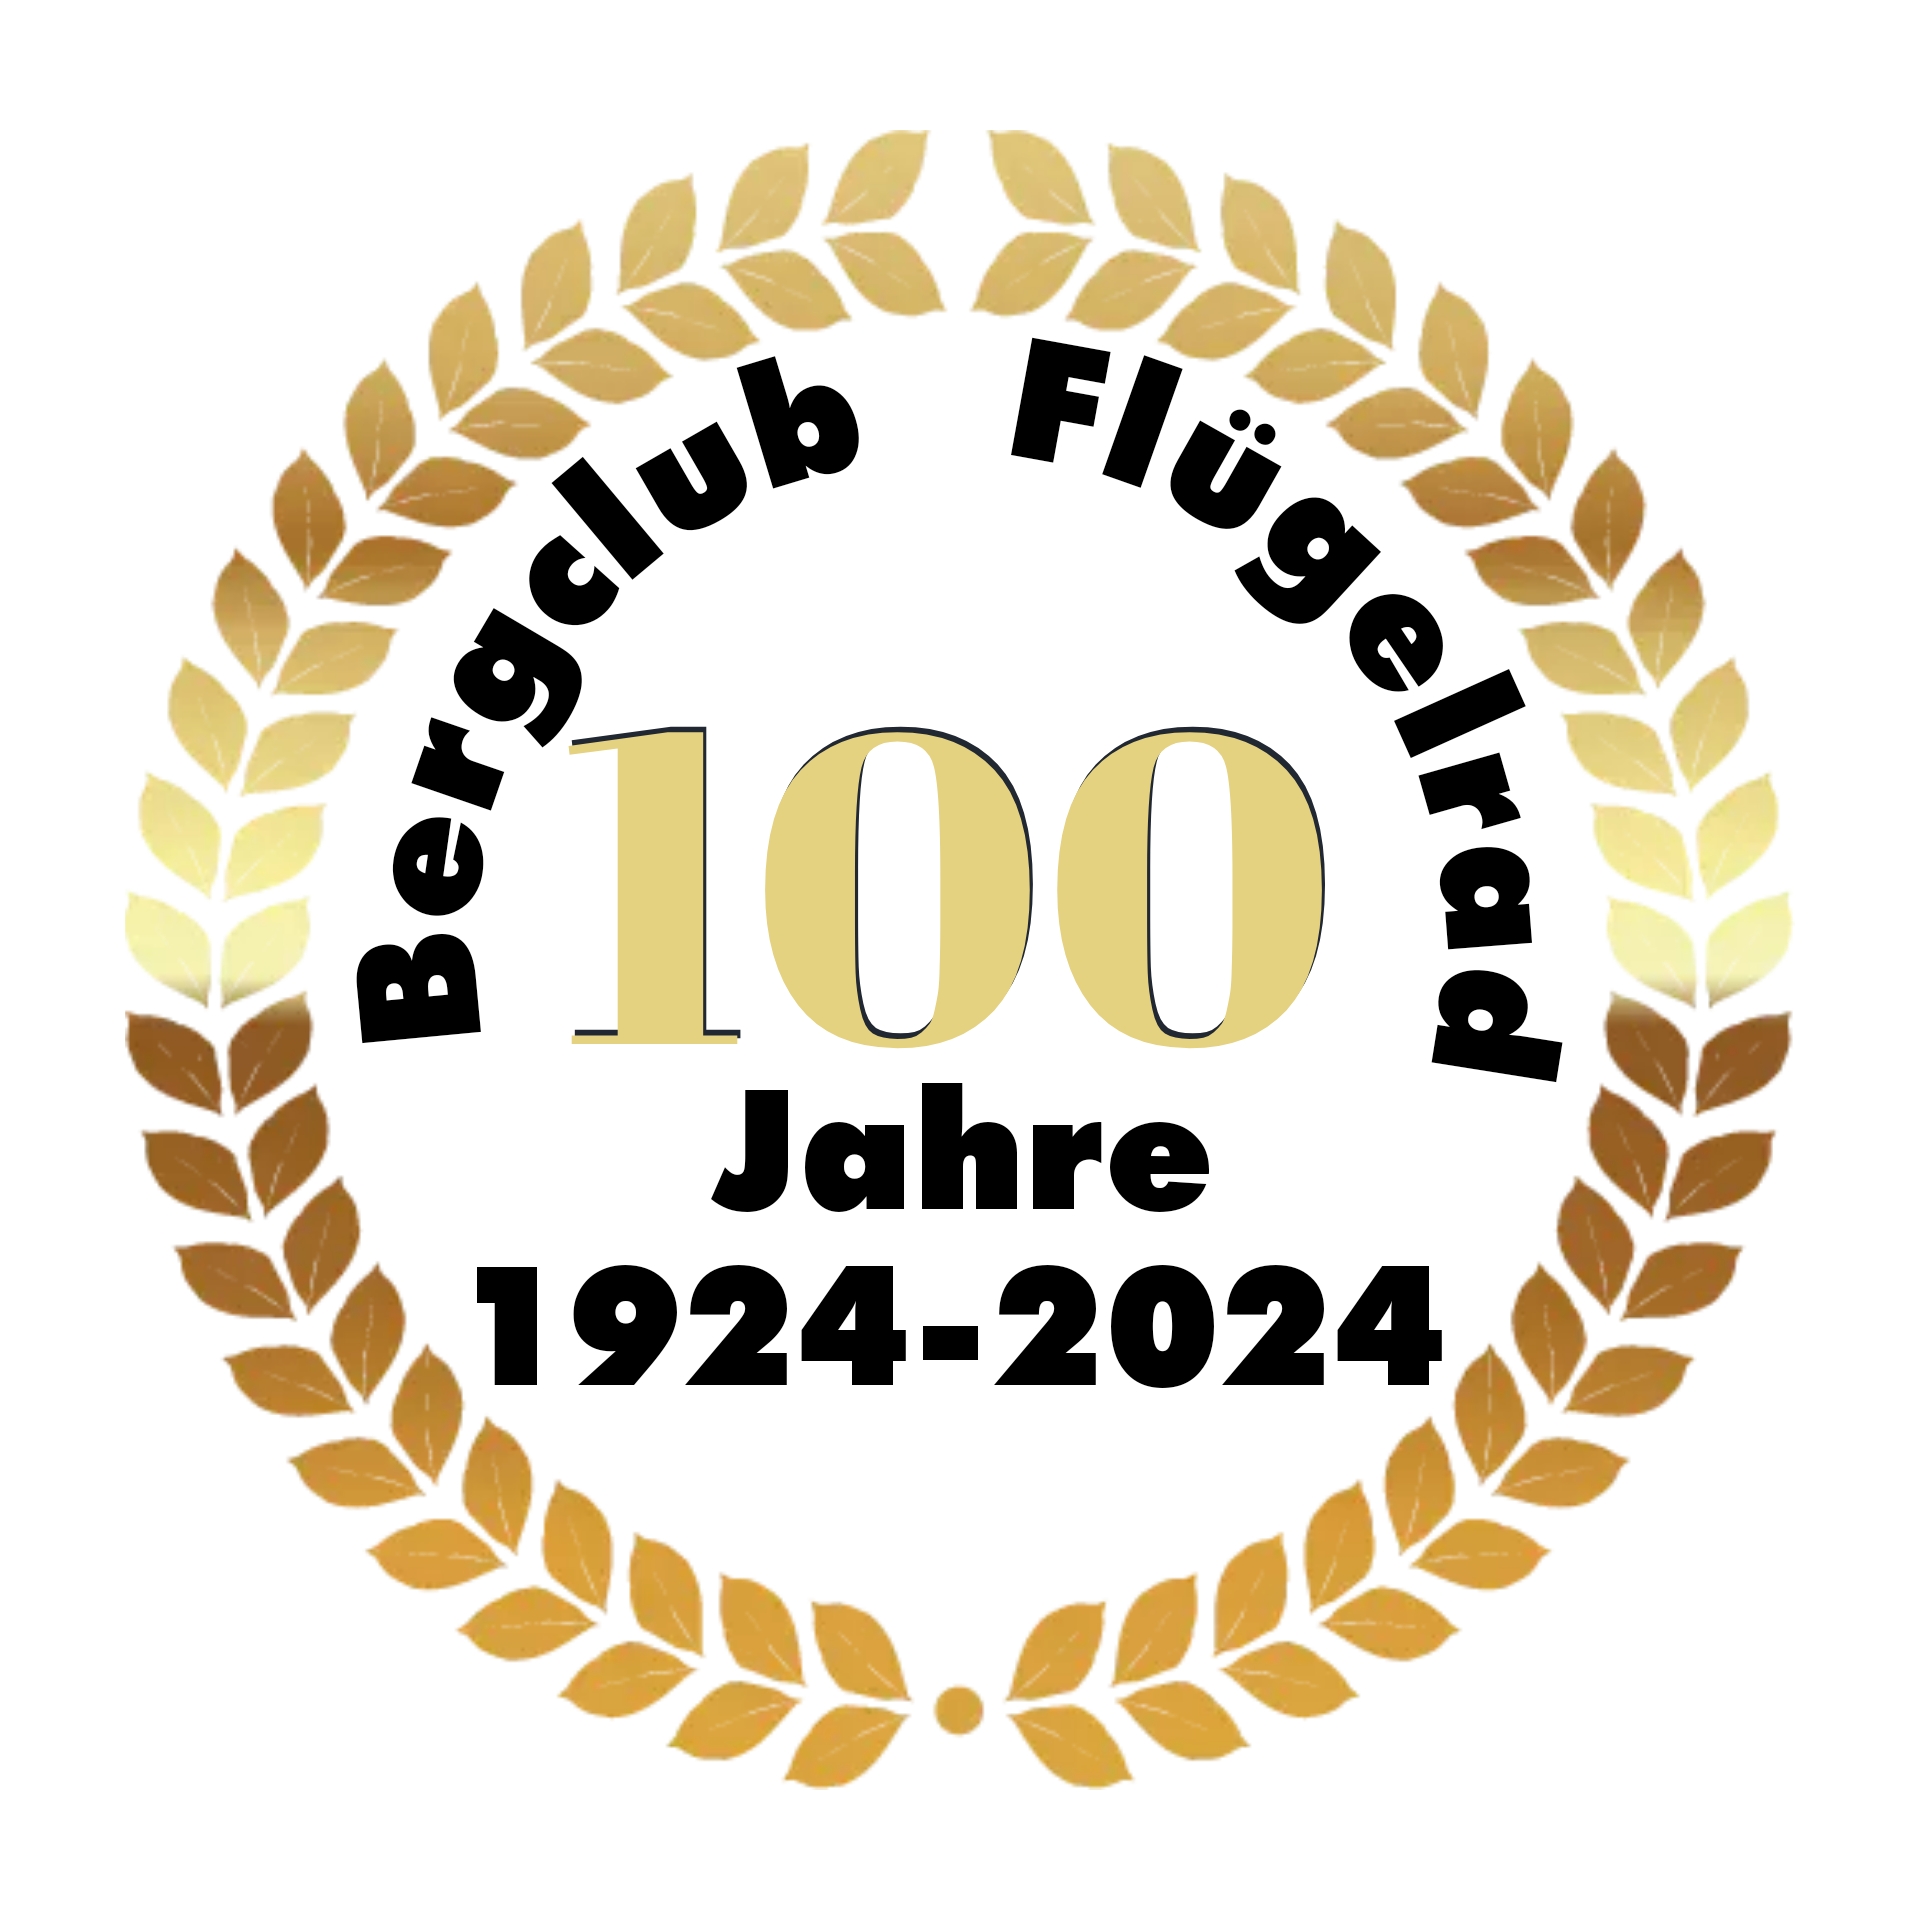 BERGCLUB FLÜGELRAD seit/depuis 1924